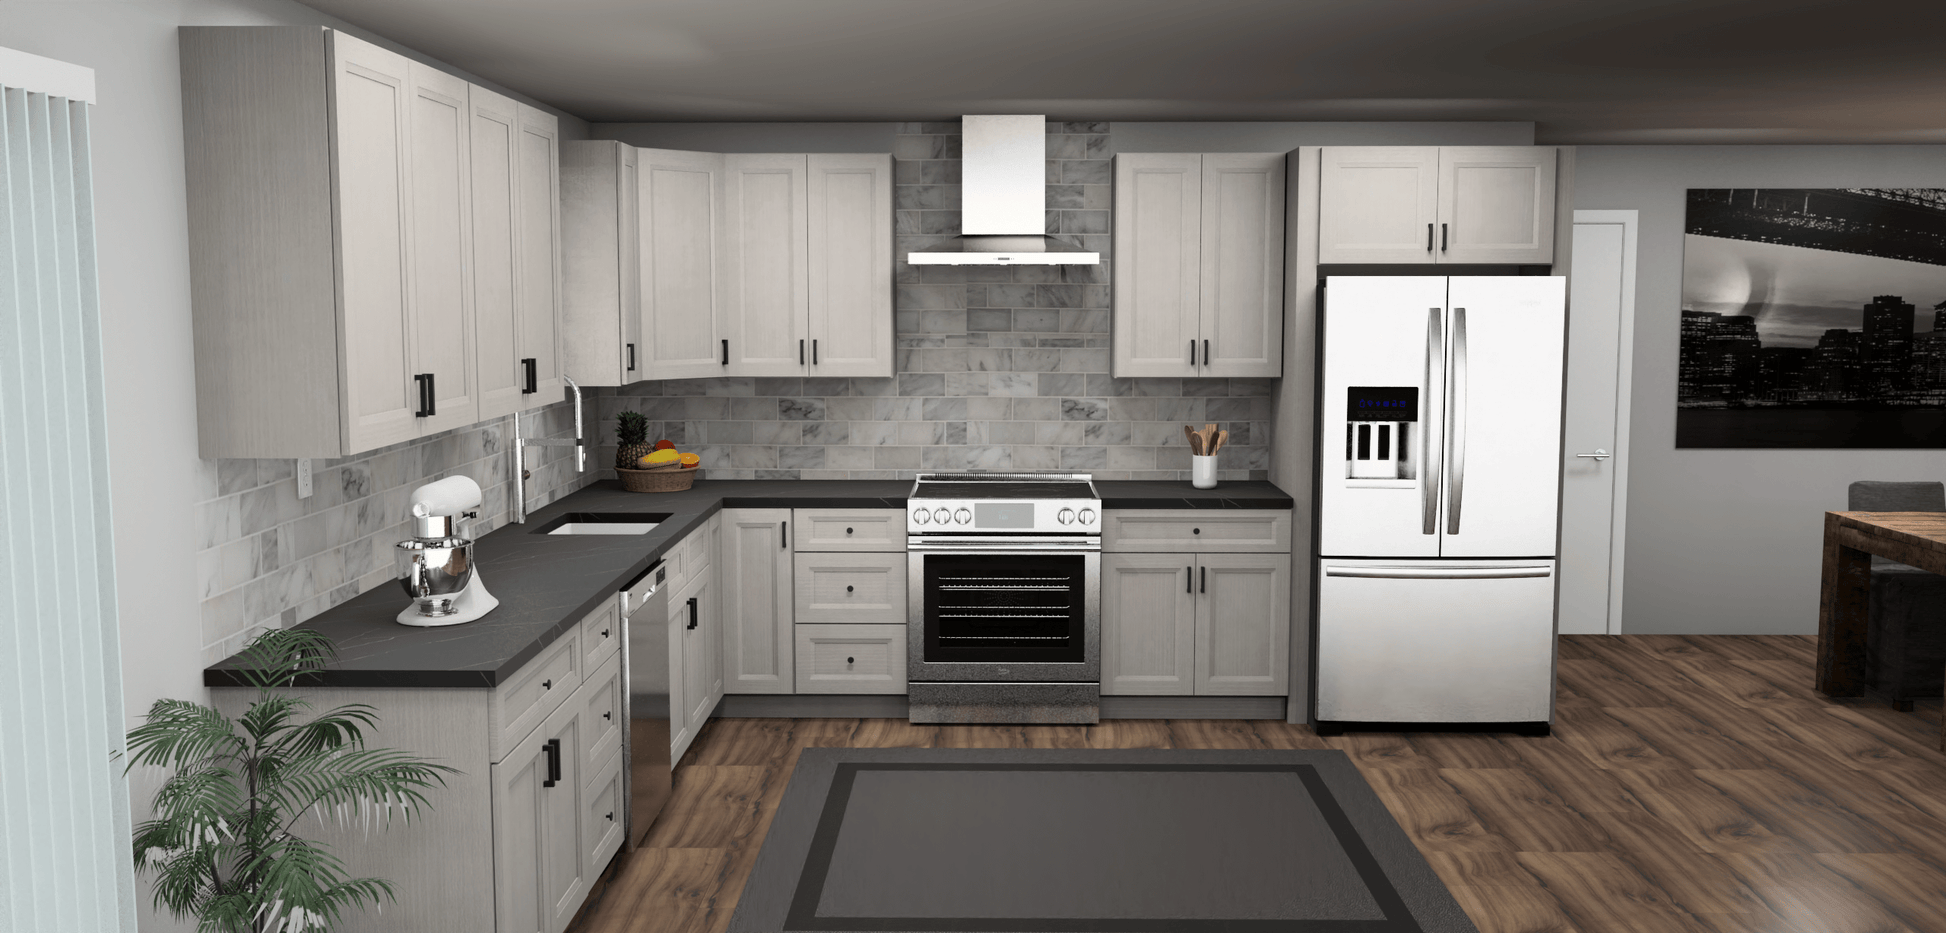 Fabuwood Allure Onyx Horizon 12 x 13 L Shaped Kitchen Front Layout Photo